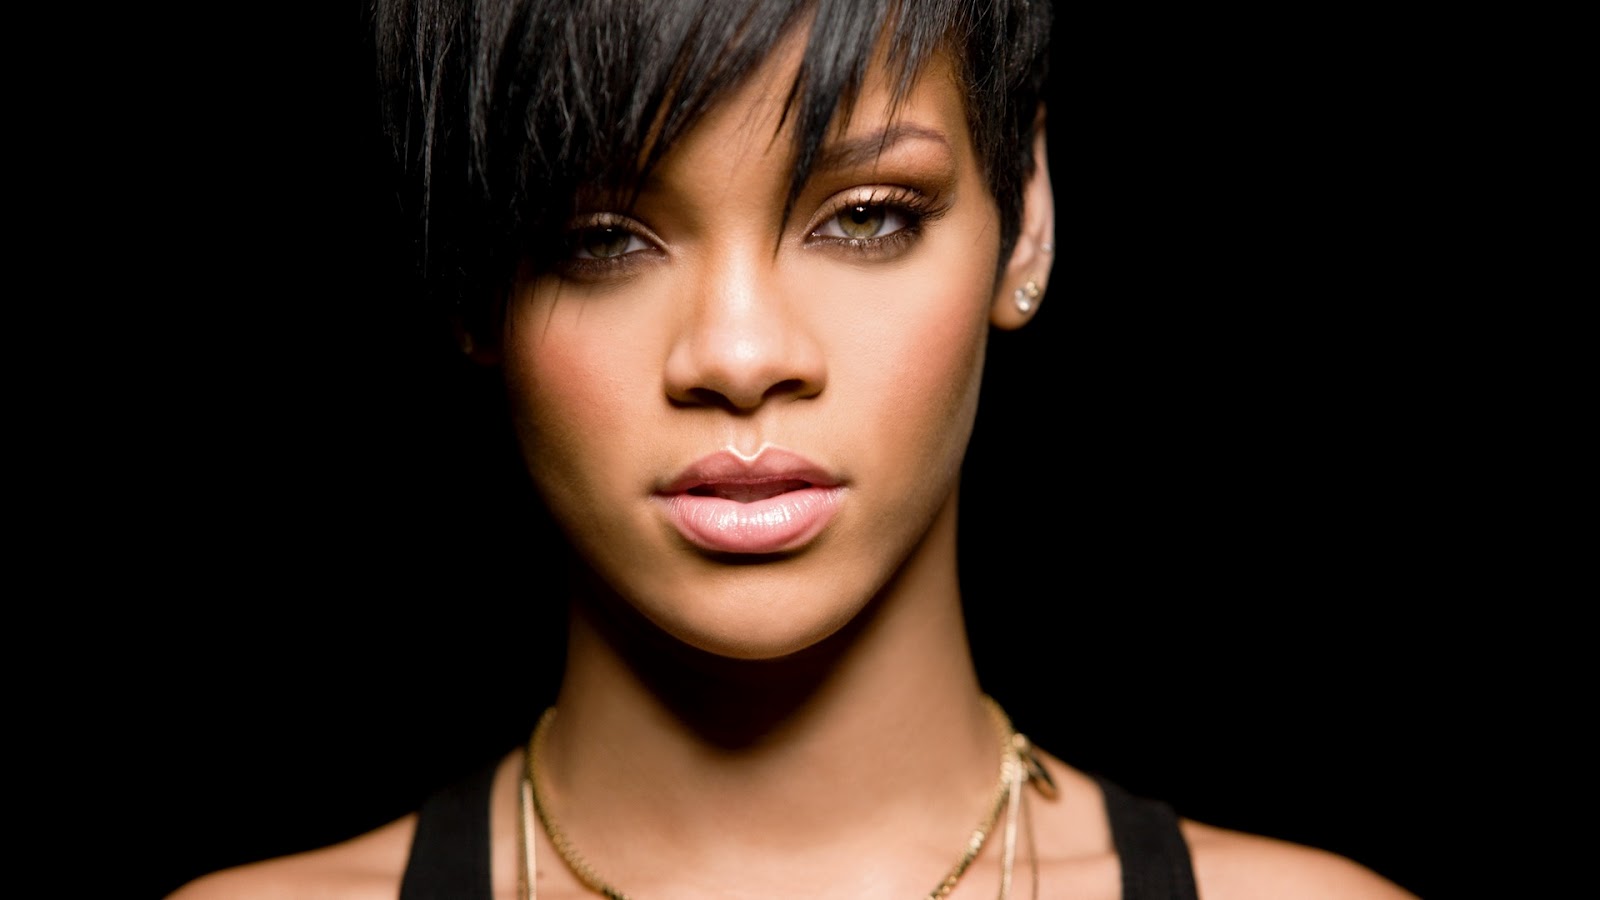 https://blogger.googleusercontent.com/img/b/R29vZ2xl/AVvXsEjNEU7Af4GJaA87HS6icV6eysuBd5U06QH00epgeo2u5GkW85bvp0zqp5MswvfZ3g34DdpmVajwOuRnml7xm8MoKqShHIR4fEpQ31Pi7RbqqlKEQP4XfWqOYlZxYocPsFJG-BZGWoknUXg/s1600/Rihanna+wallpapers+2.jpg